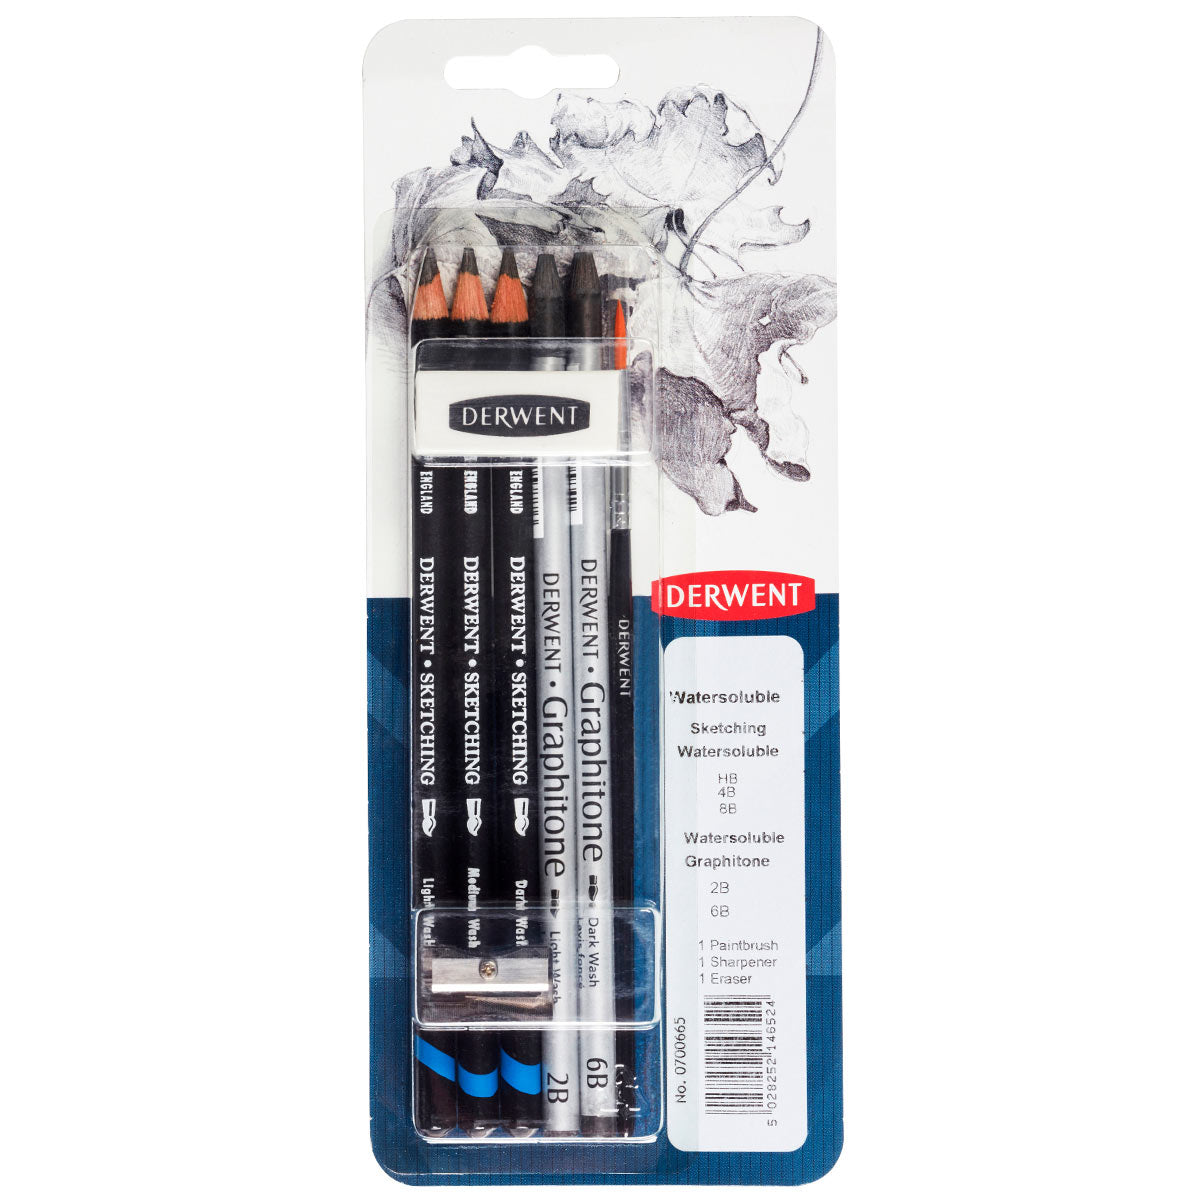 Derwent - mixte media blister 8 pack - crayon d'esquisse Watersoluble